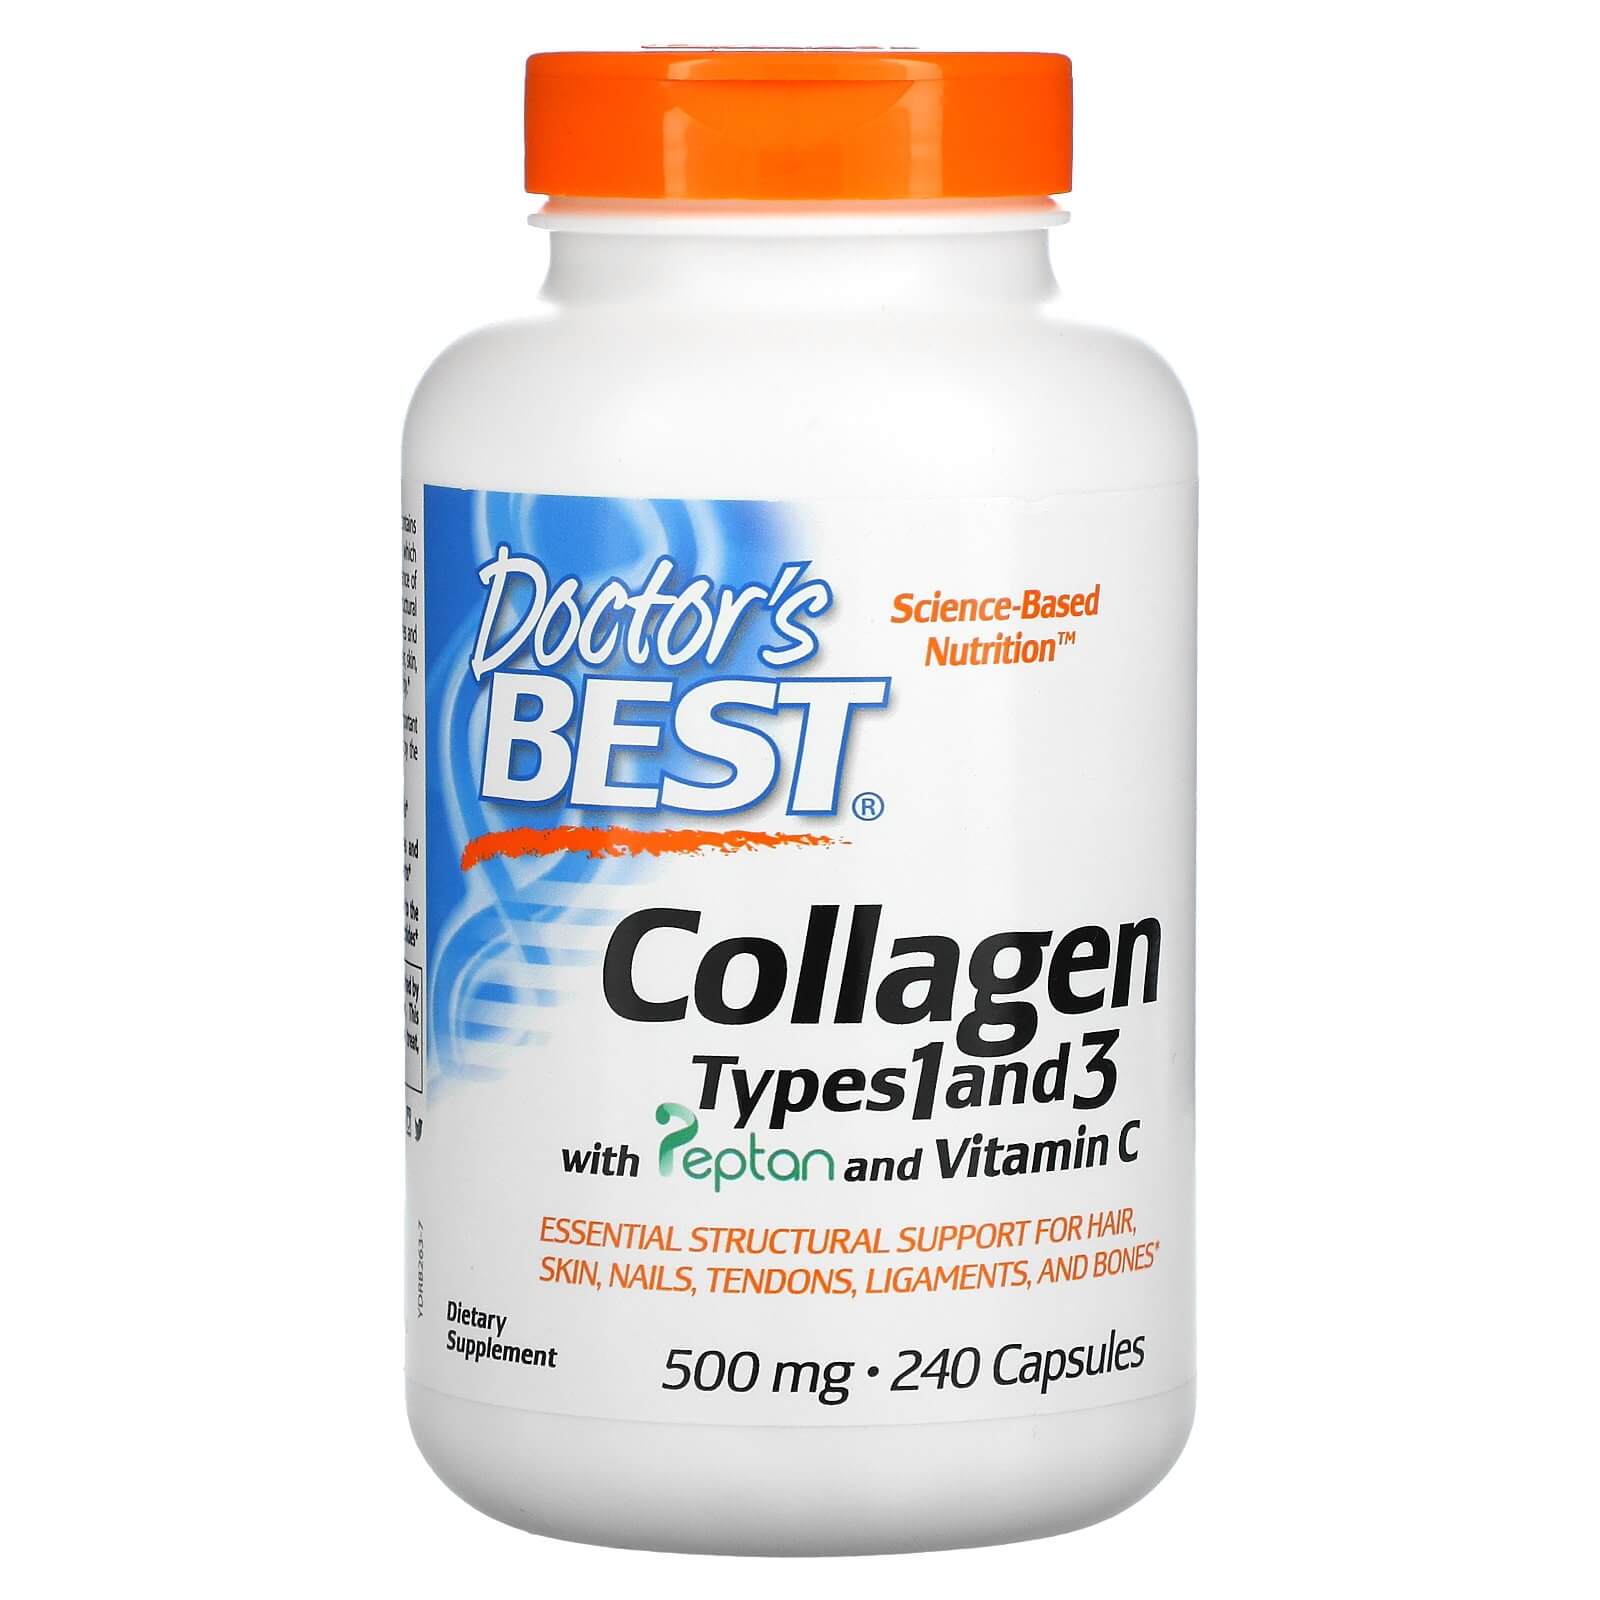 Коллаген 1 и 3 типов с витамином C, 500 мг, Doctor's Best, Peptan, 240 капсул коллаген растворимый it s collagen настоящий морской коллаген защита суставов и связок 40 г